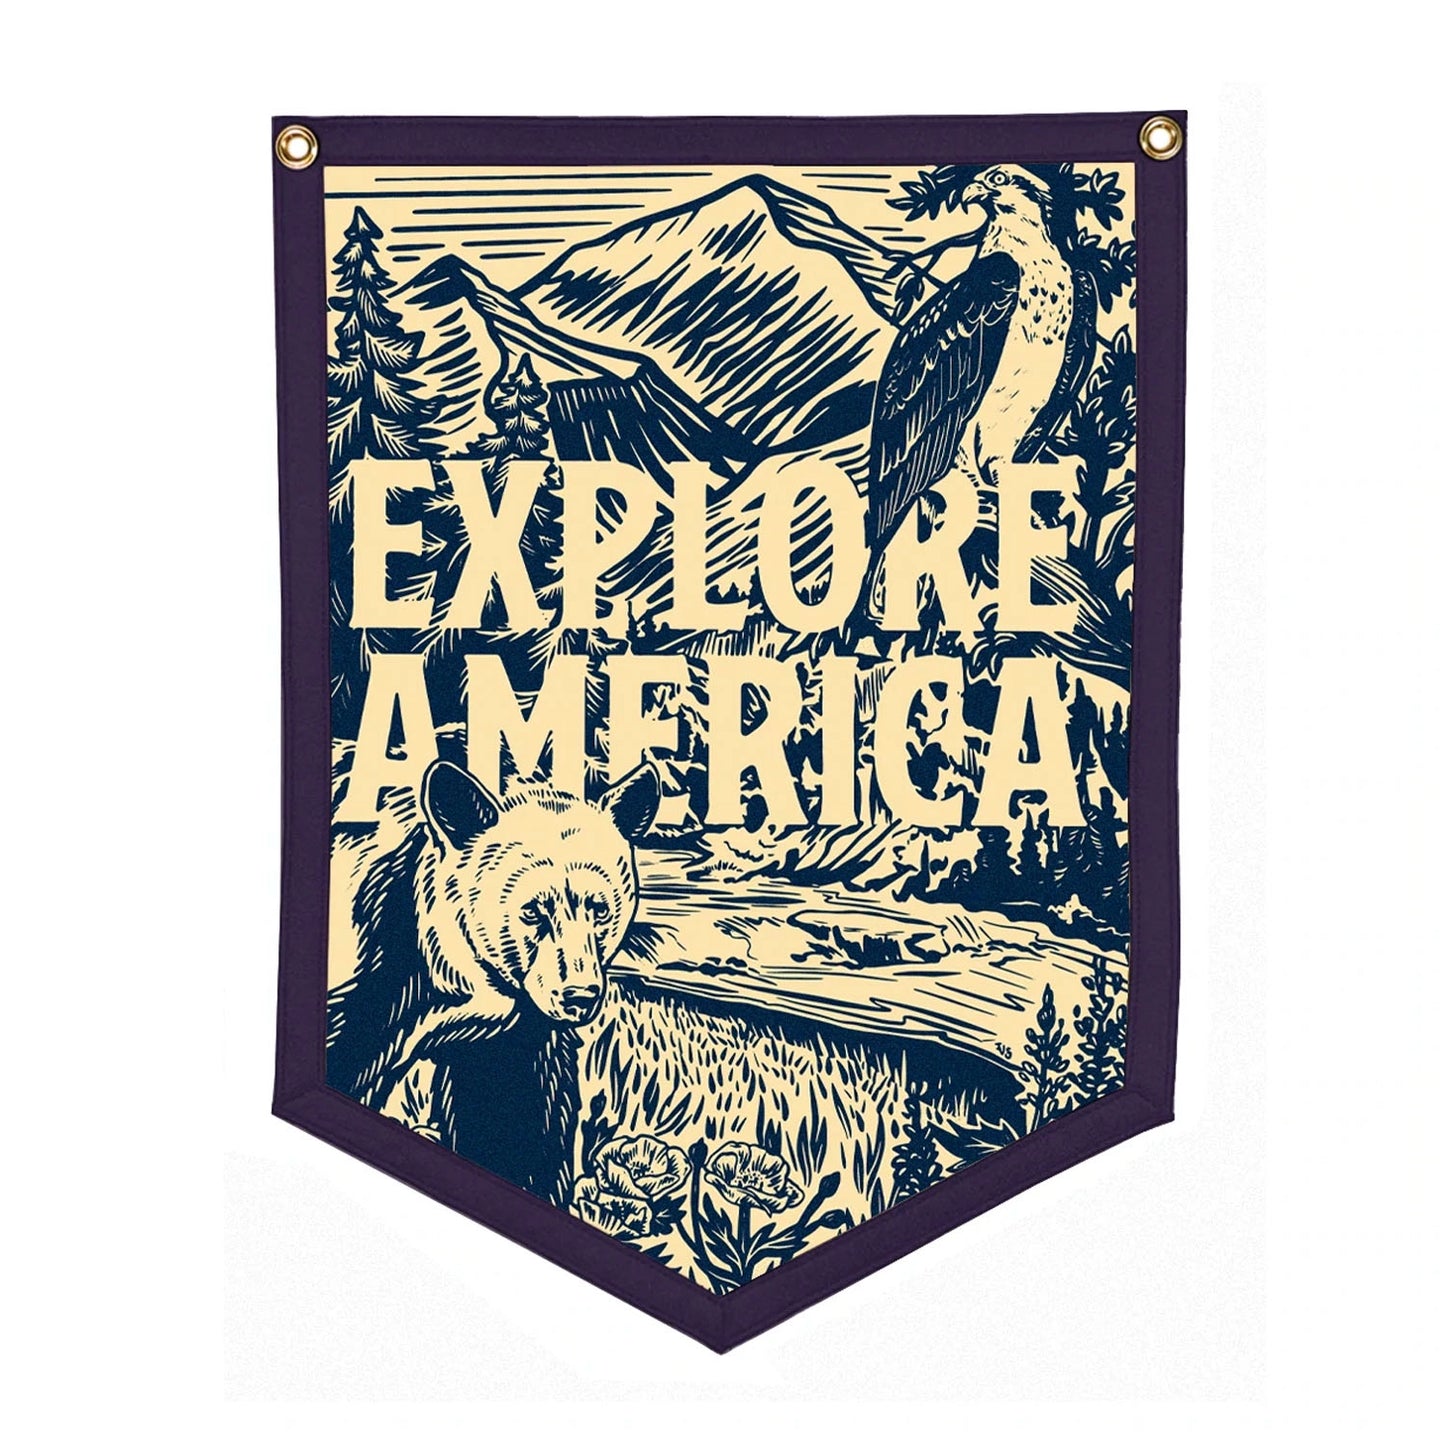 Explore America. Camp Flag